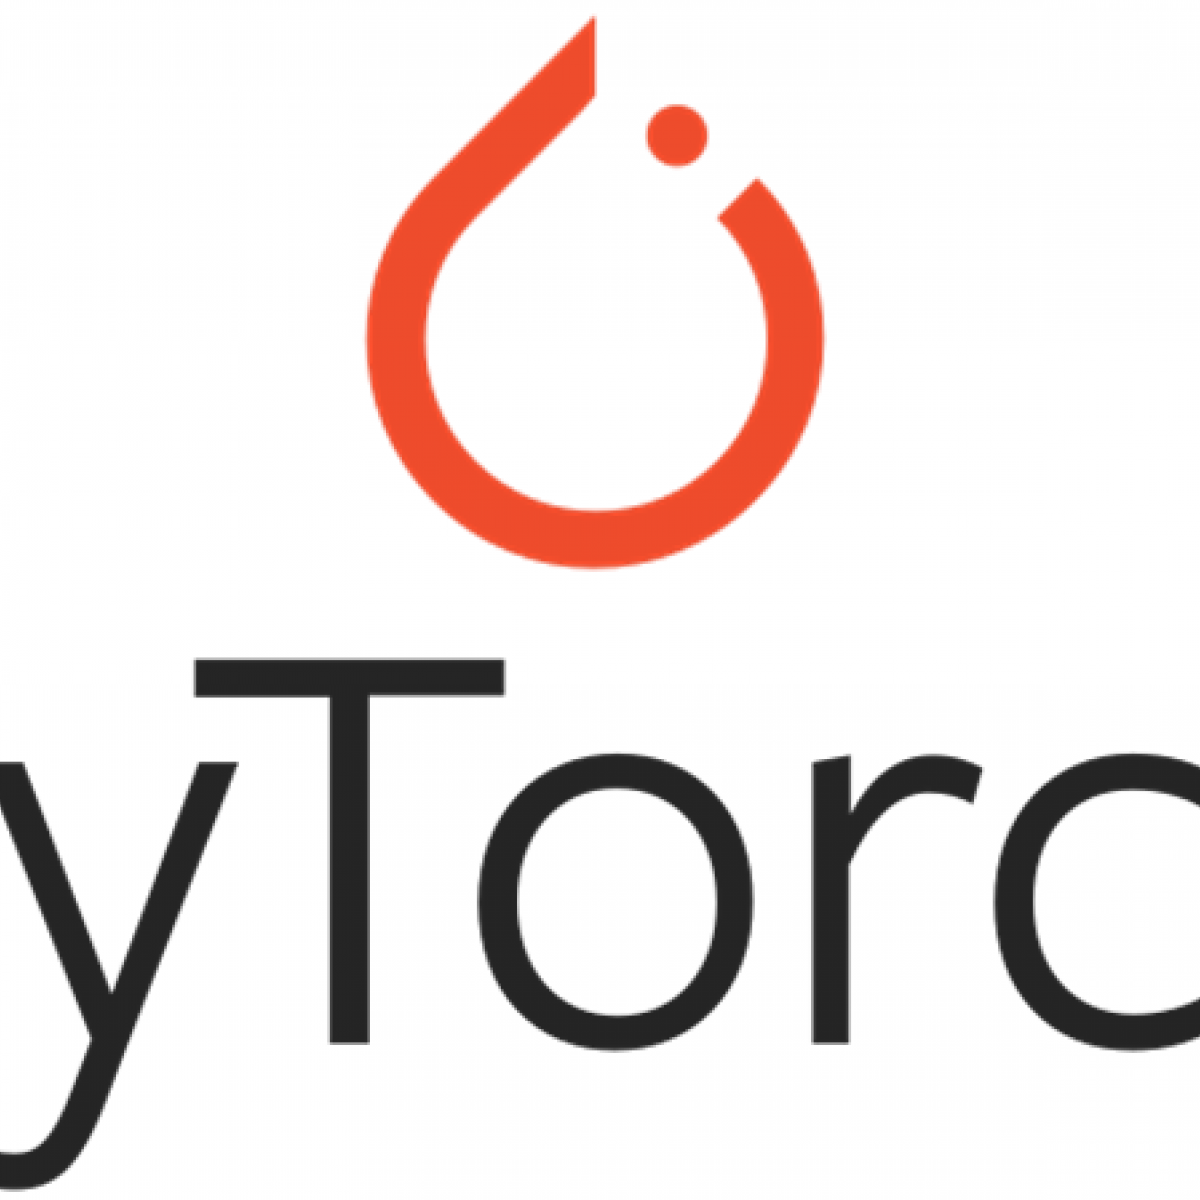 Https download pytorch org. PYTORCH. PYTORCH лого. PYTORCH картинка. PYTORCH Python.